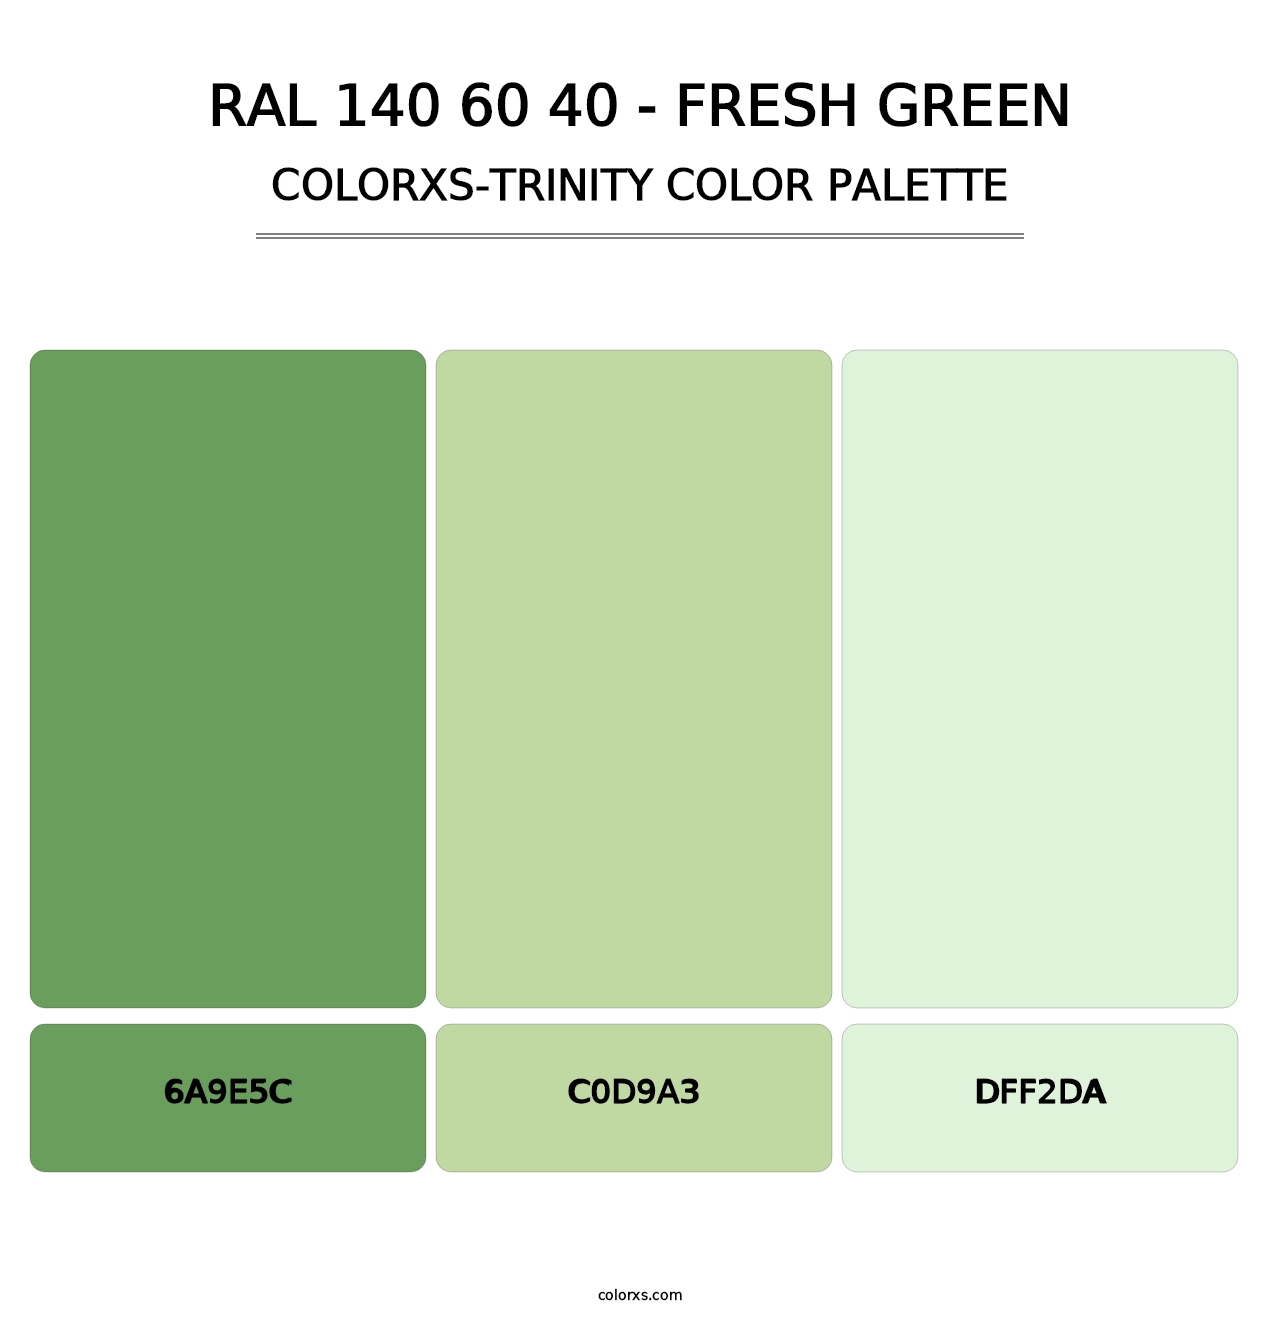 RAL 140 60 40 - Fresh Green - Colorxs Trinity Palette